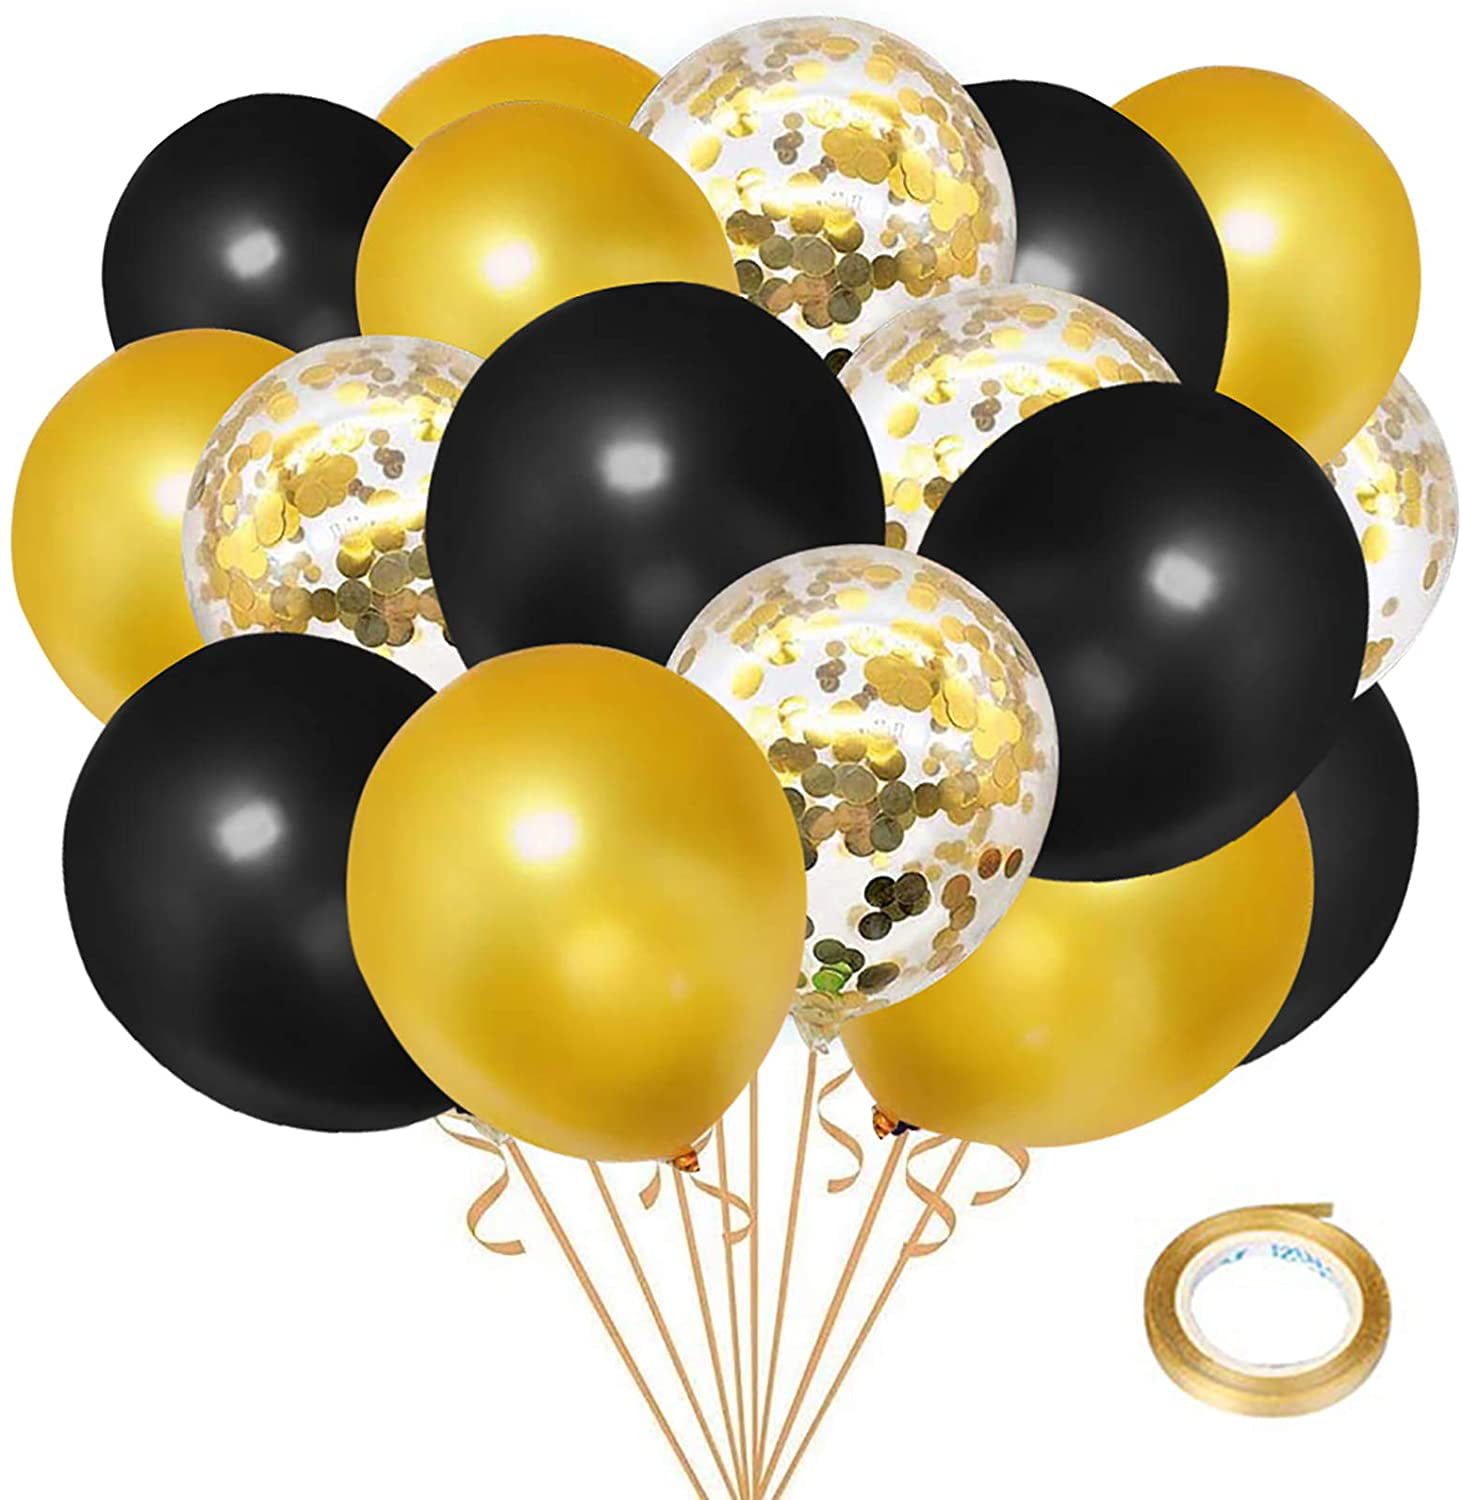 LATEX CONFETTI BALLOONS PARTY BIRTHDAY WEDDING DECORATION GOLD BLACK 